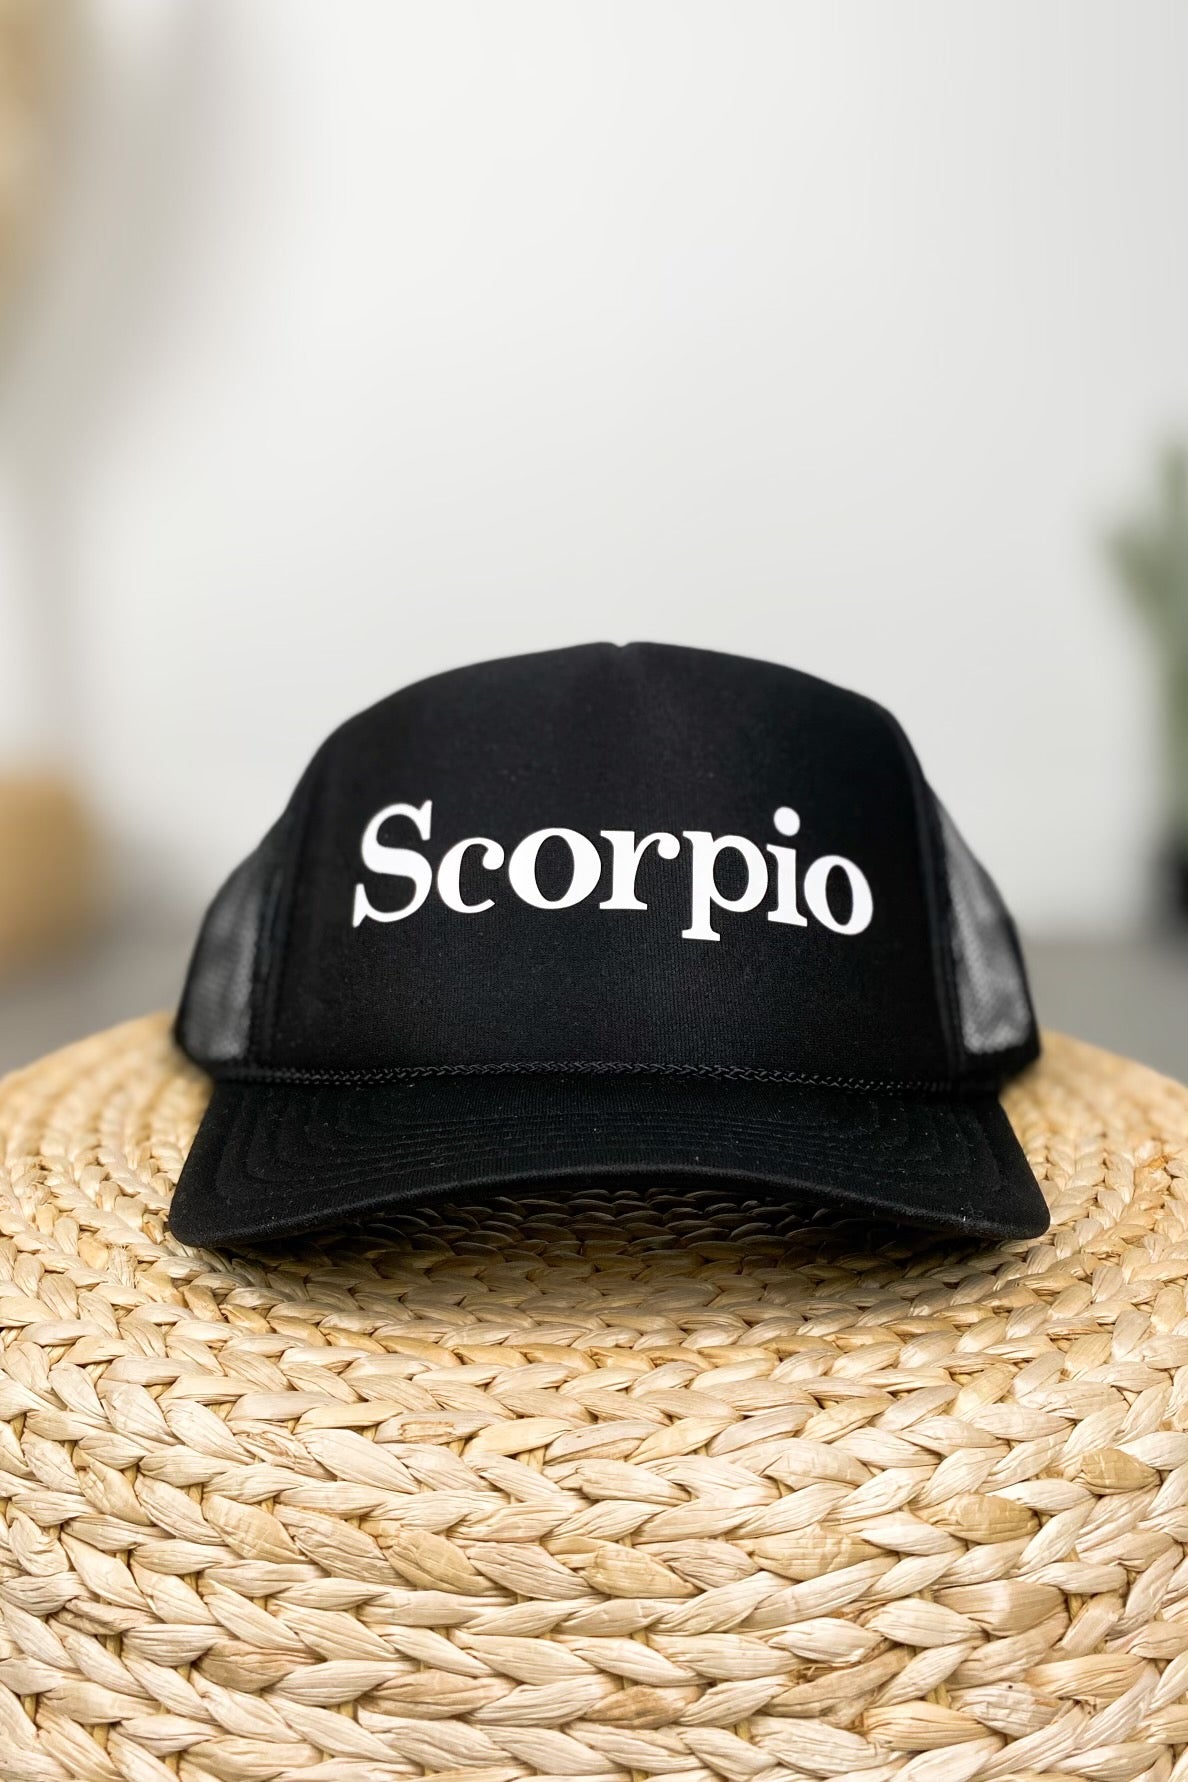 Scorpio trucker hat black - Trendy Hats at Lush Fashion Lounge Boutique in Oklahoma City